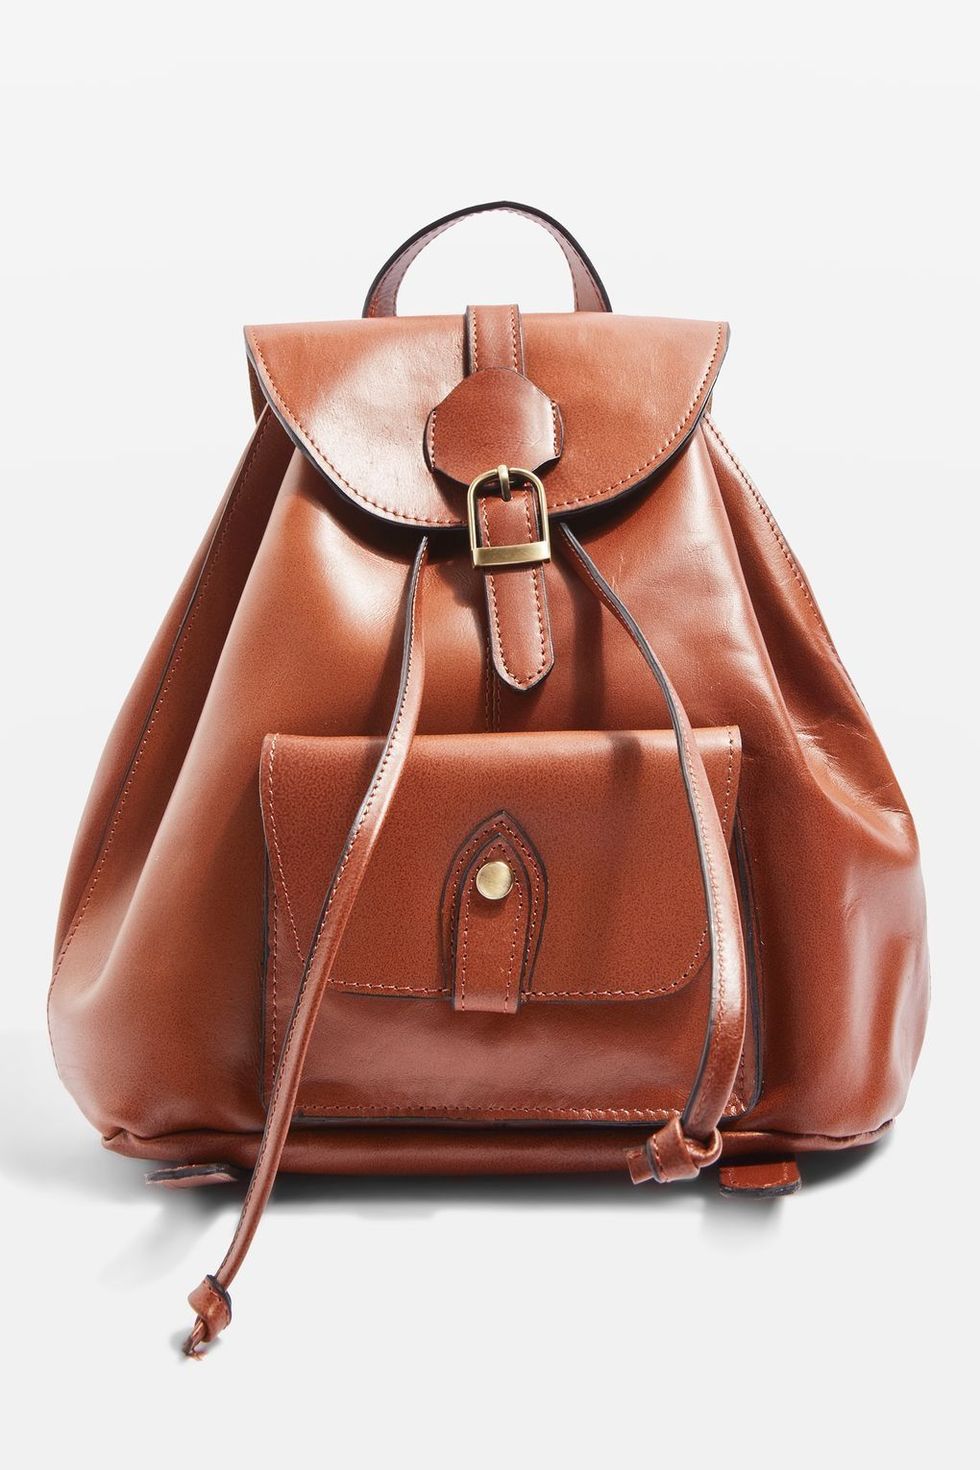 Bag, Handbag, Leather, Brown, Tan, Fashion accessory, Shoulder bag, Satchel, Luggage and bags, 